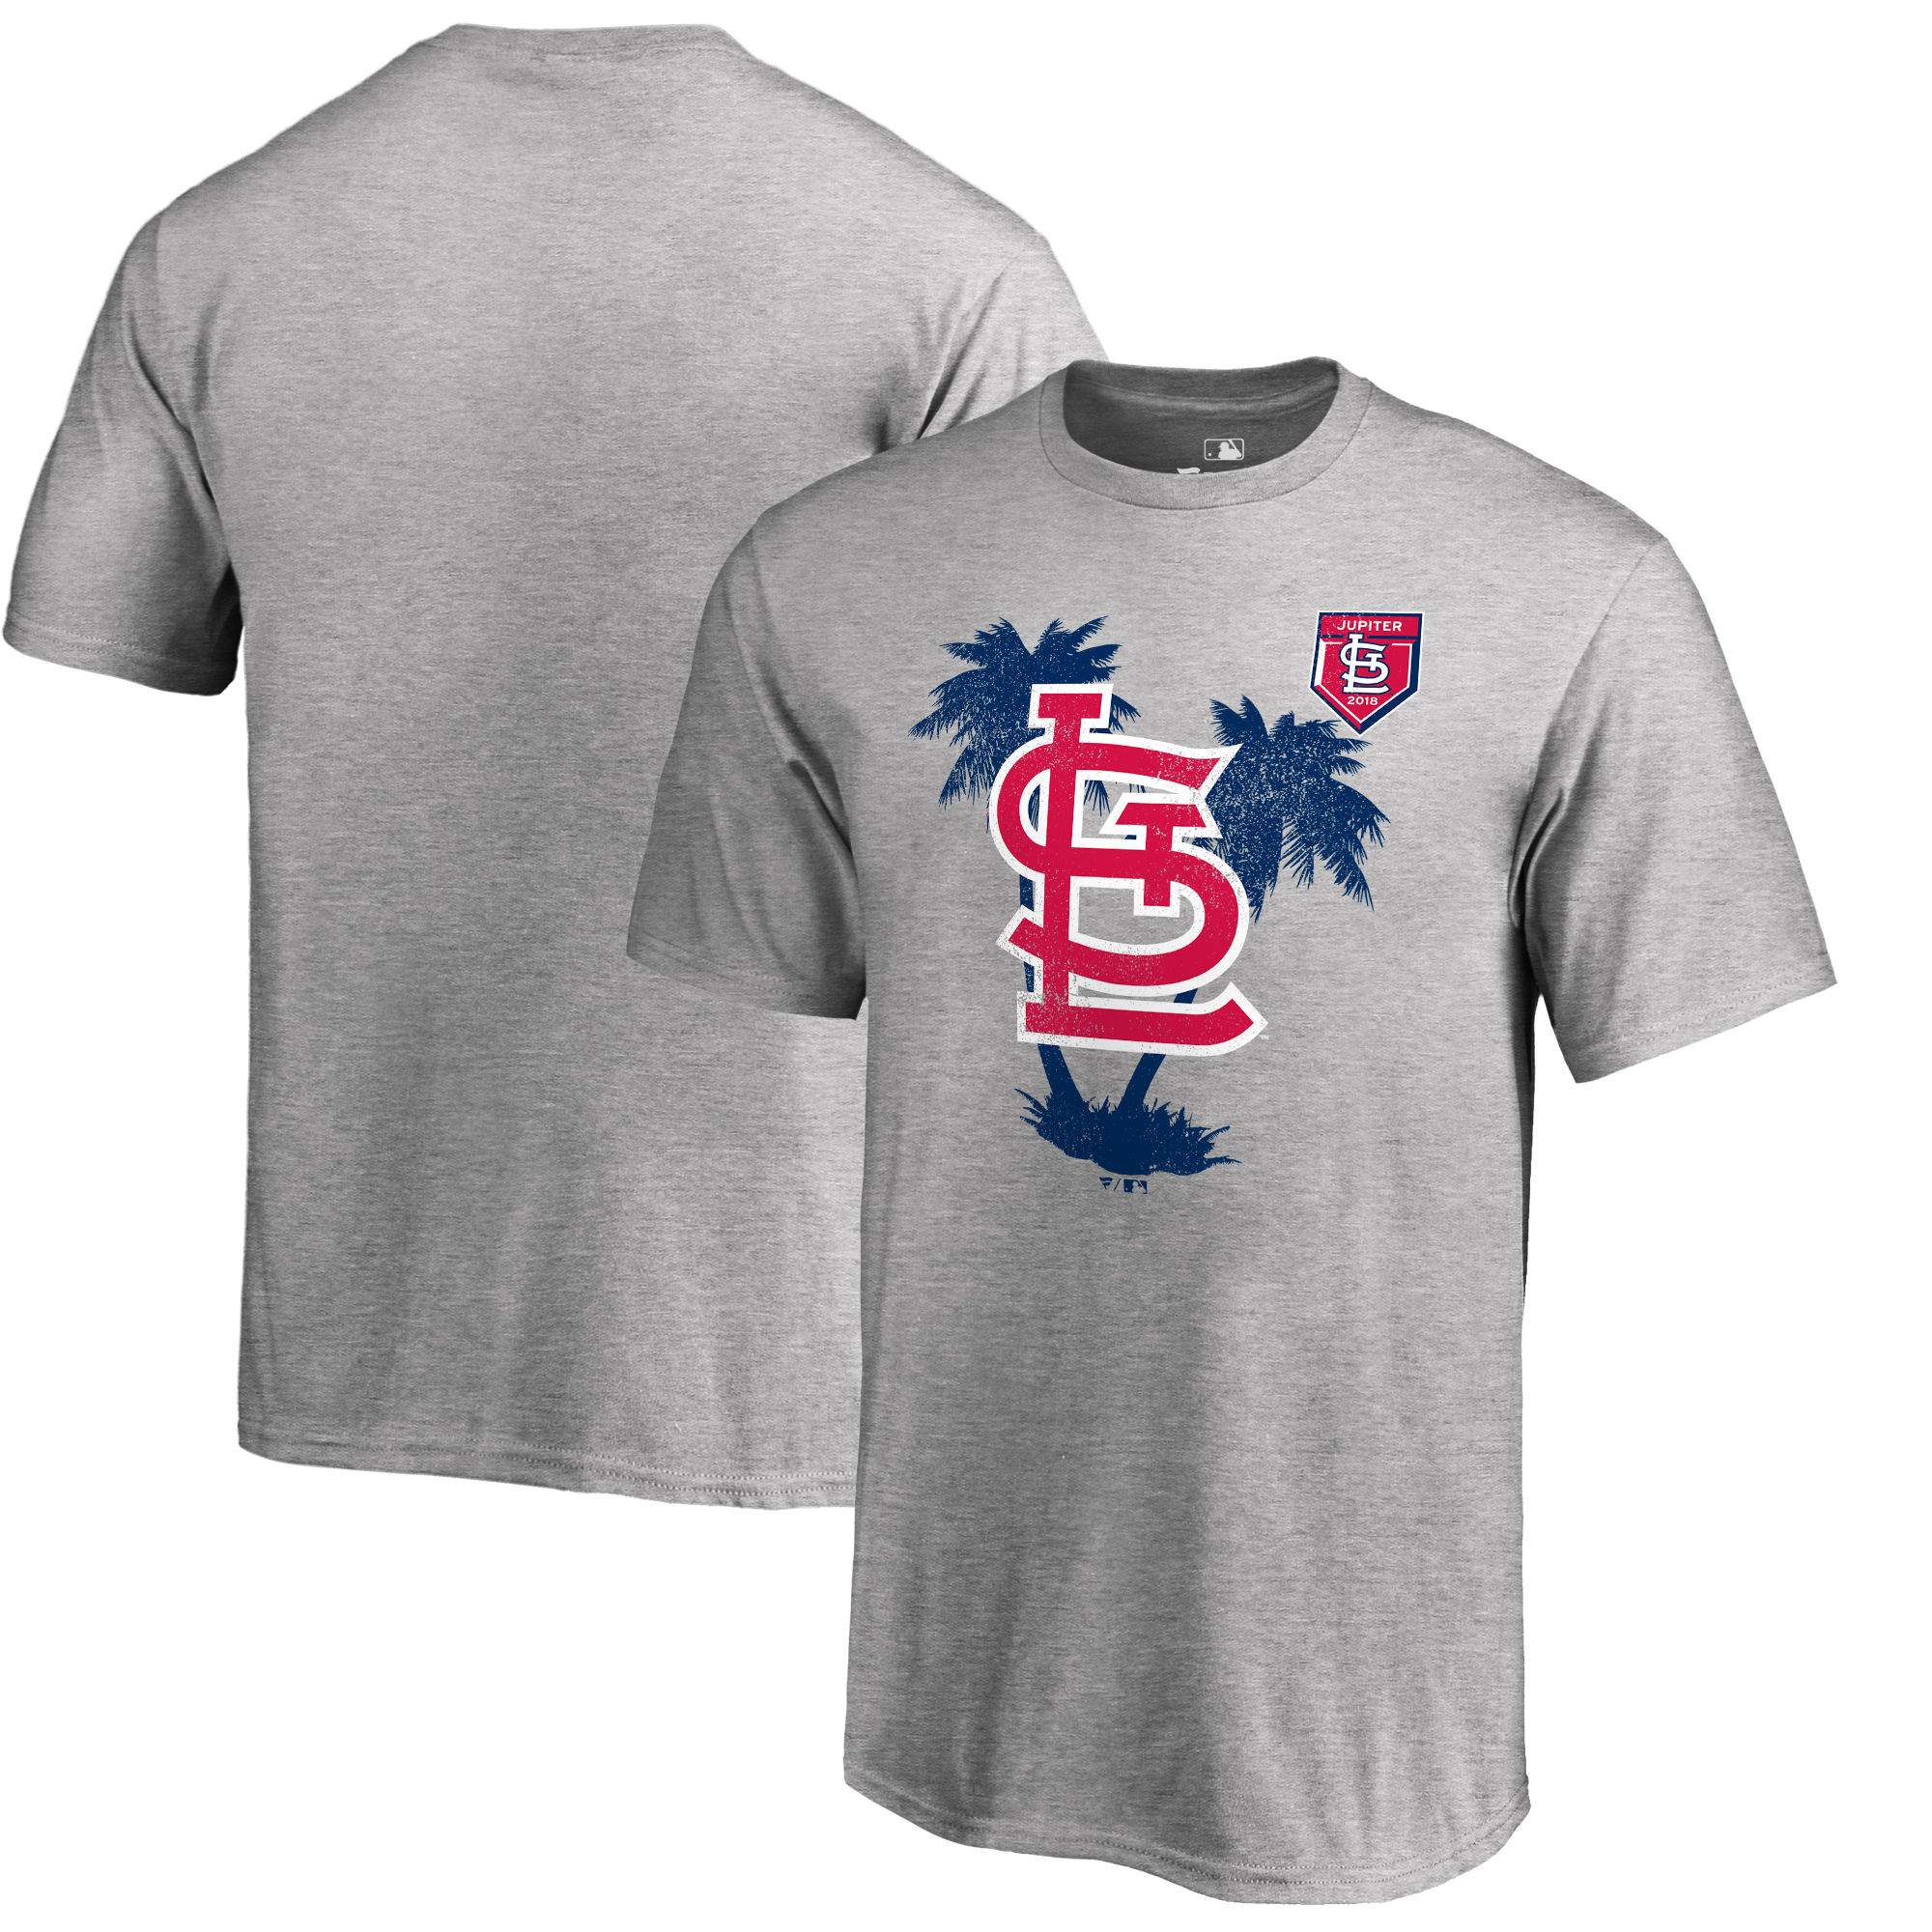 St. Louis Cardinals Fanatics Branded 2018 MLB Spring Training Vintage T Shirt Heather Gray